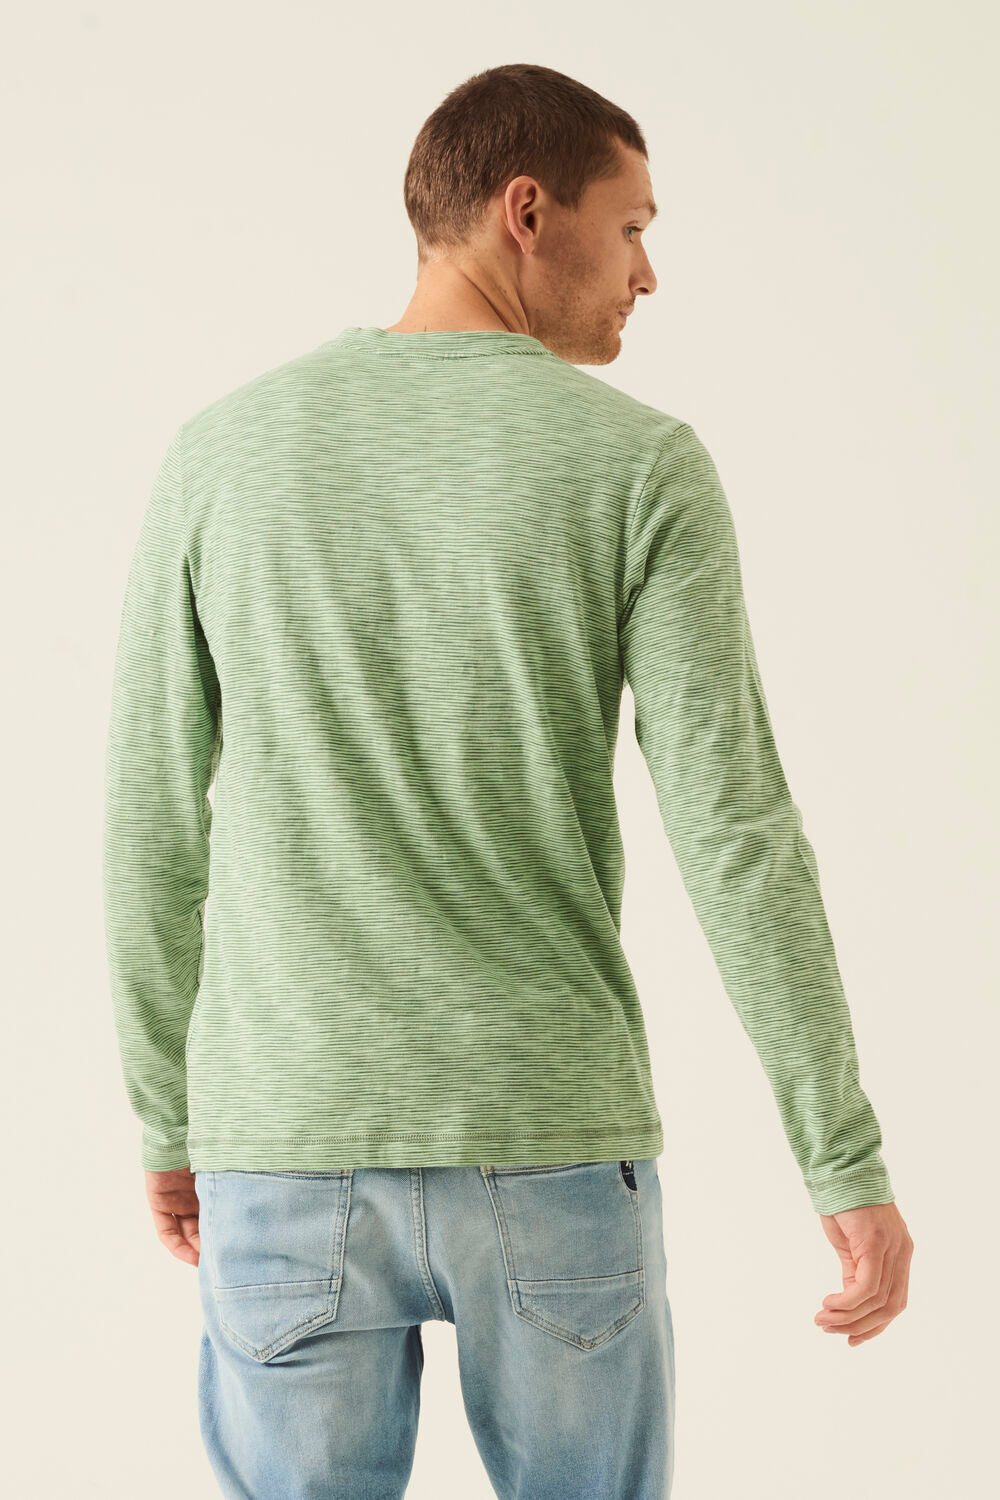 T-Shirt Vert À Manches Longues